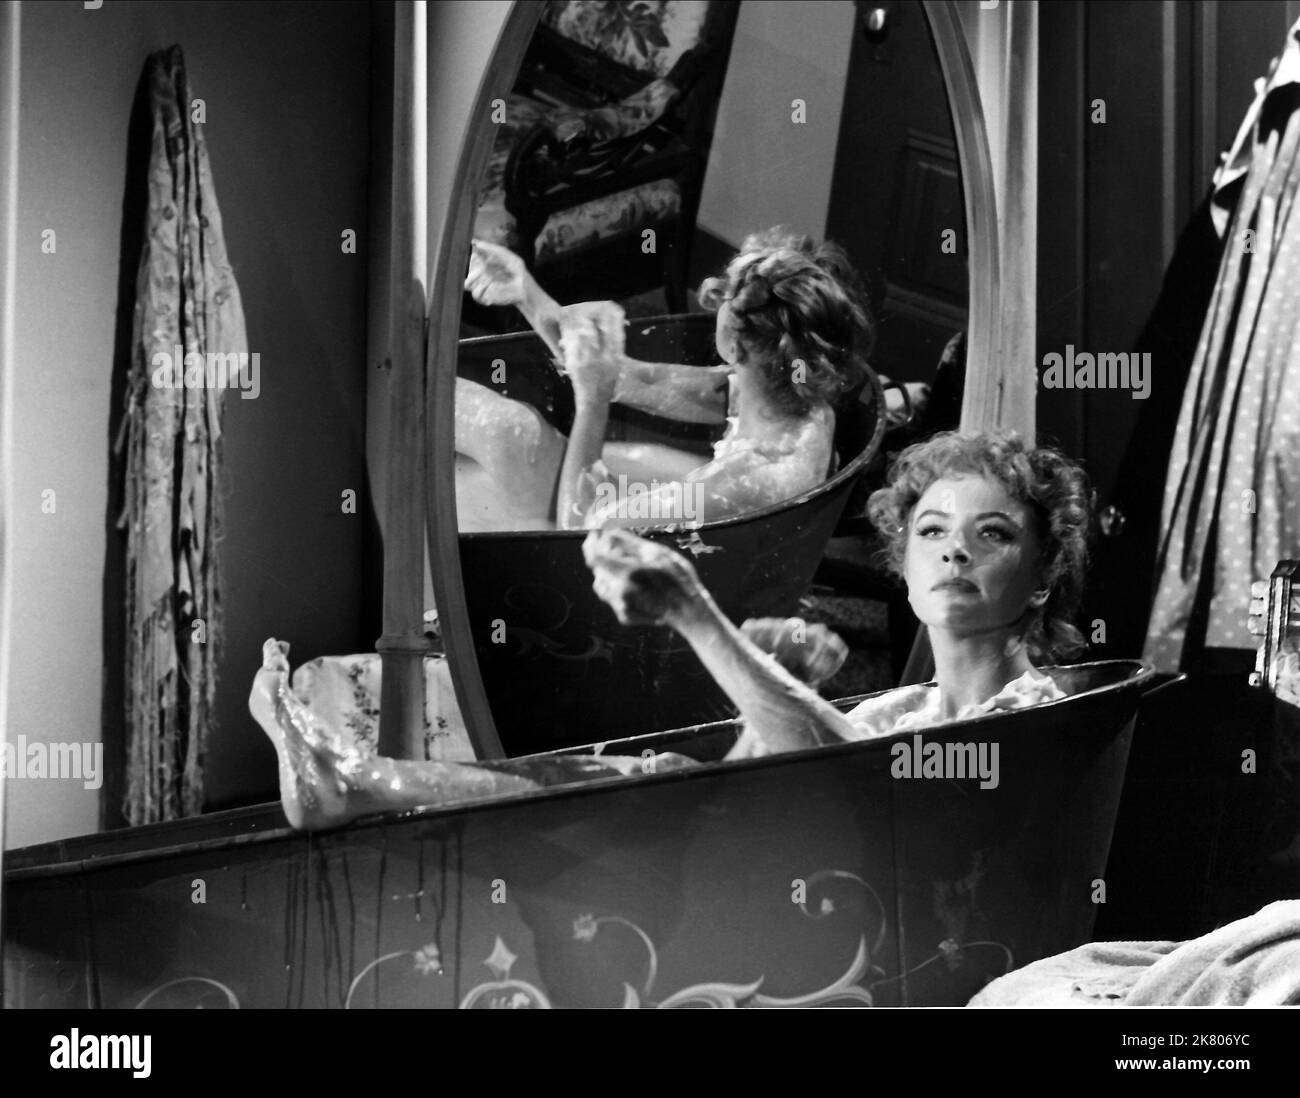 Gunsmoke 1955 amanda blake hi-res stock photography and images - Alamy